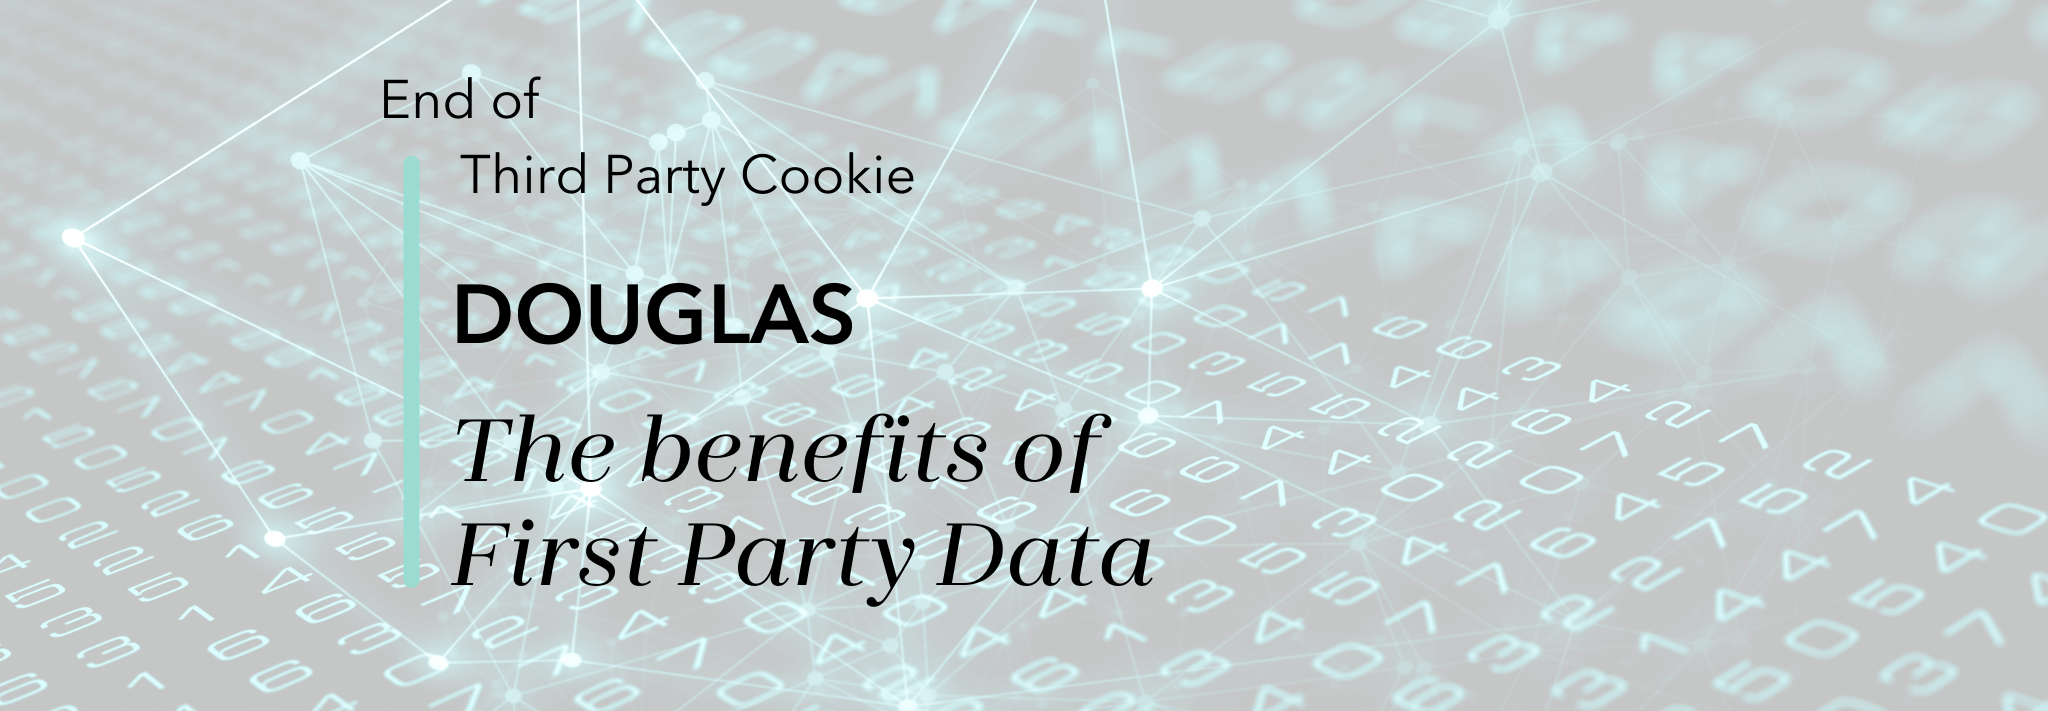 Titelbild mit Schriftzug - End of Third Party Cookie: The benefits of First Party Data